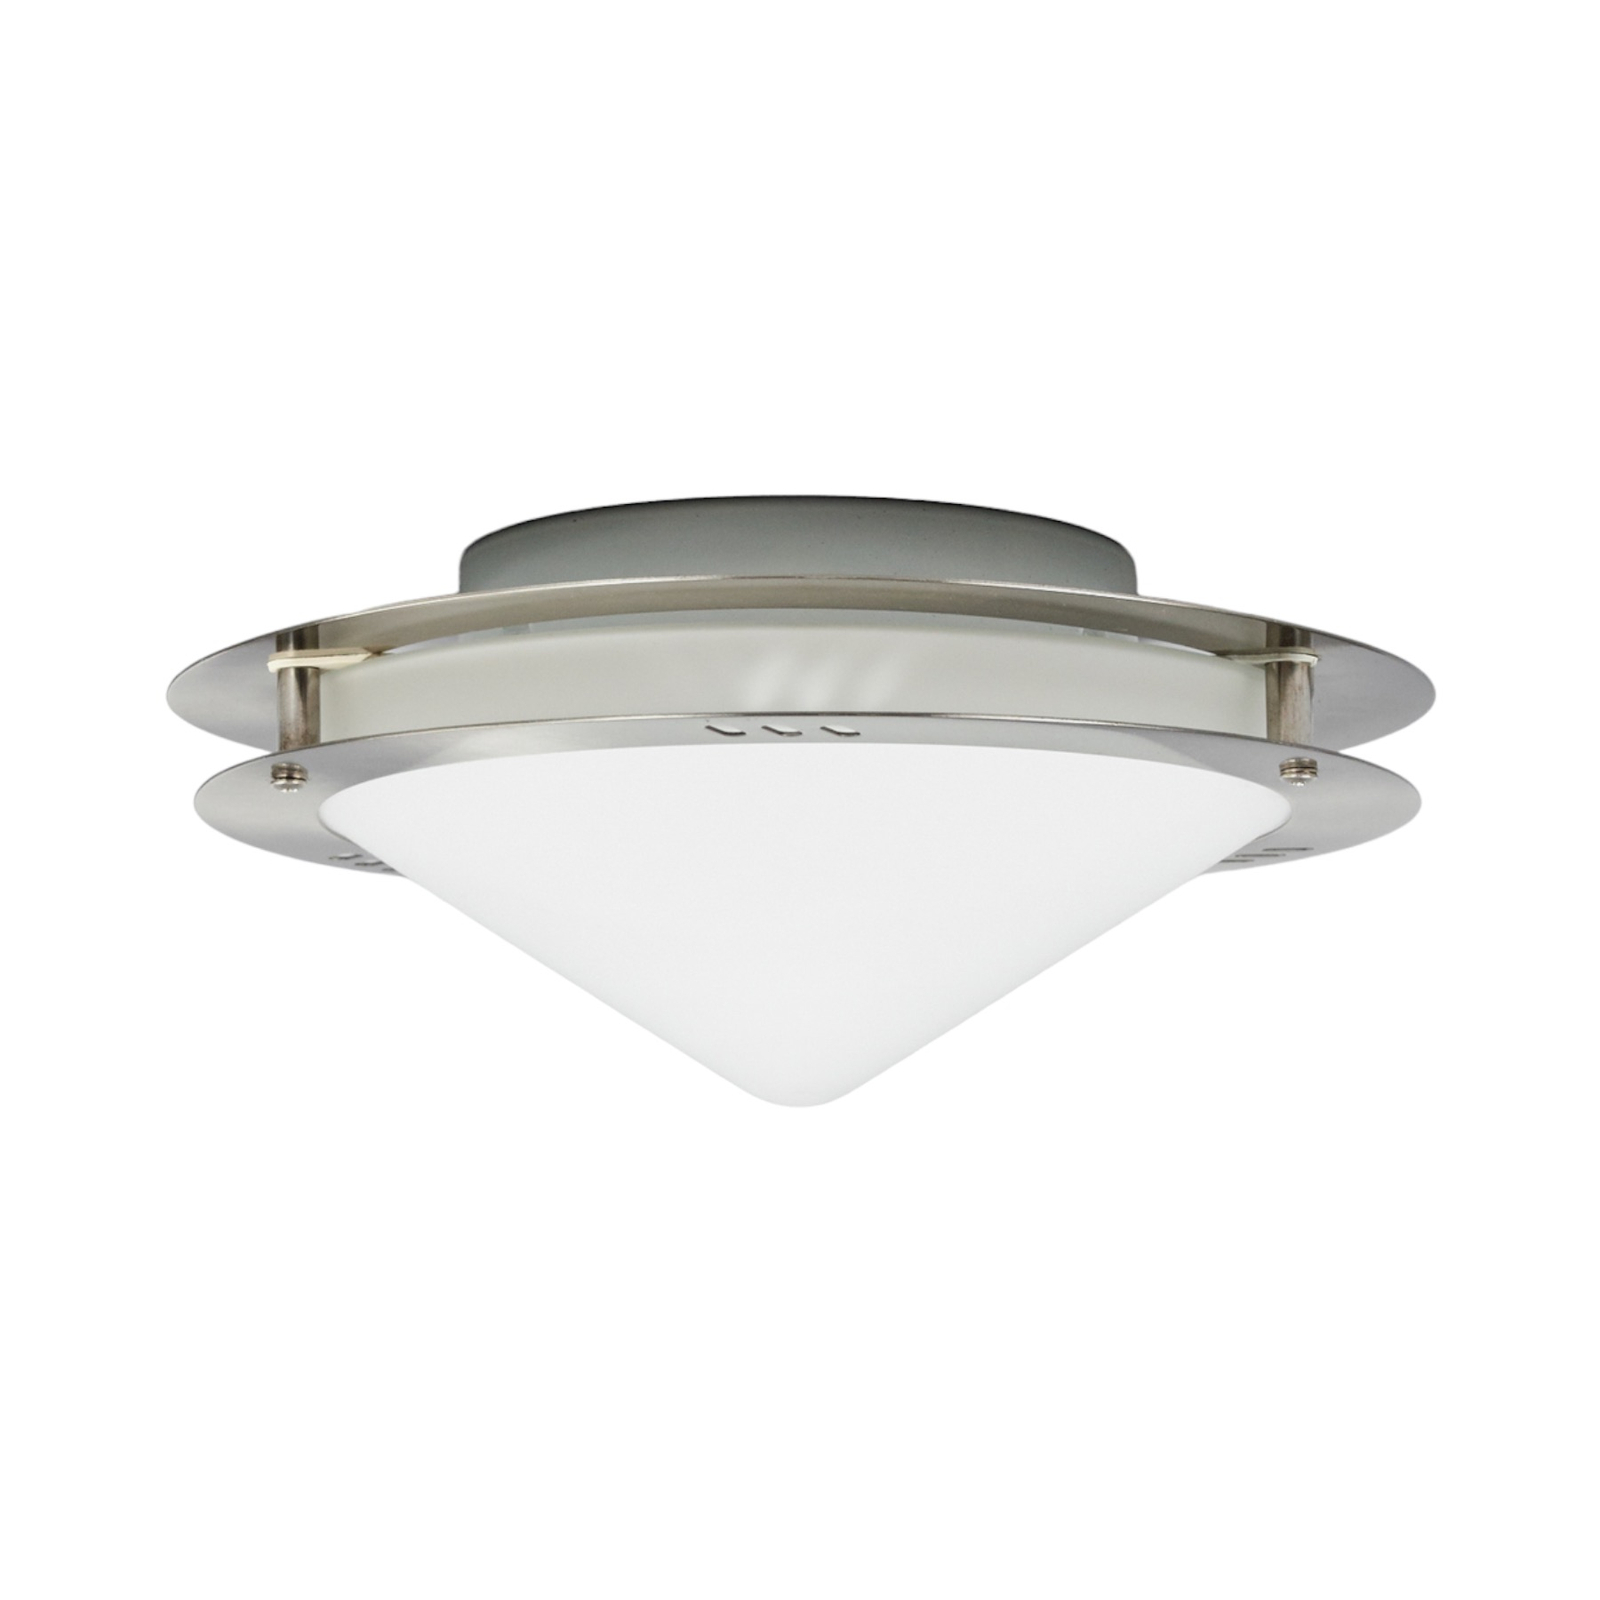 Stainless steel outdoor ceiling light Reneas